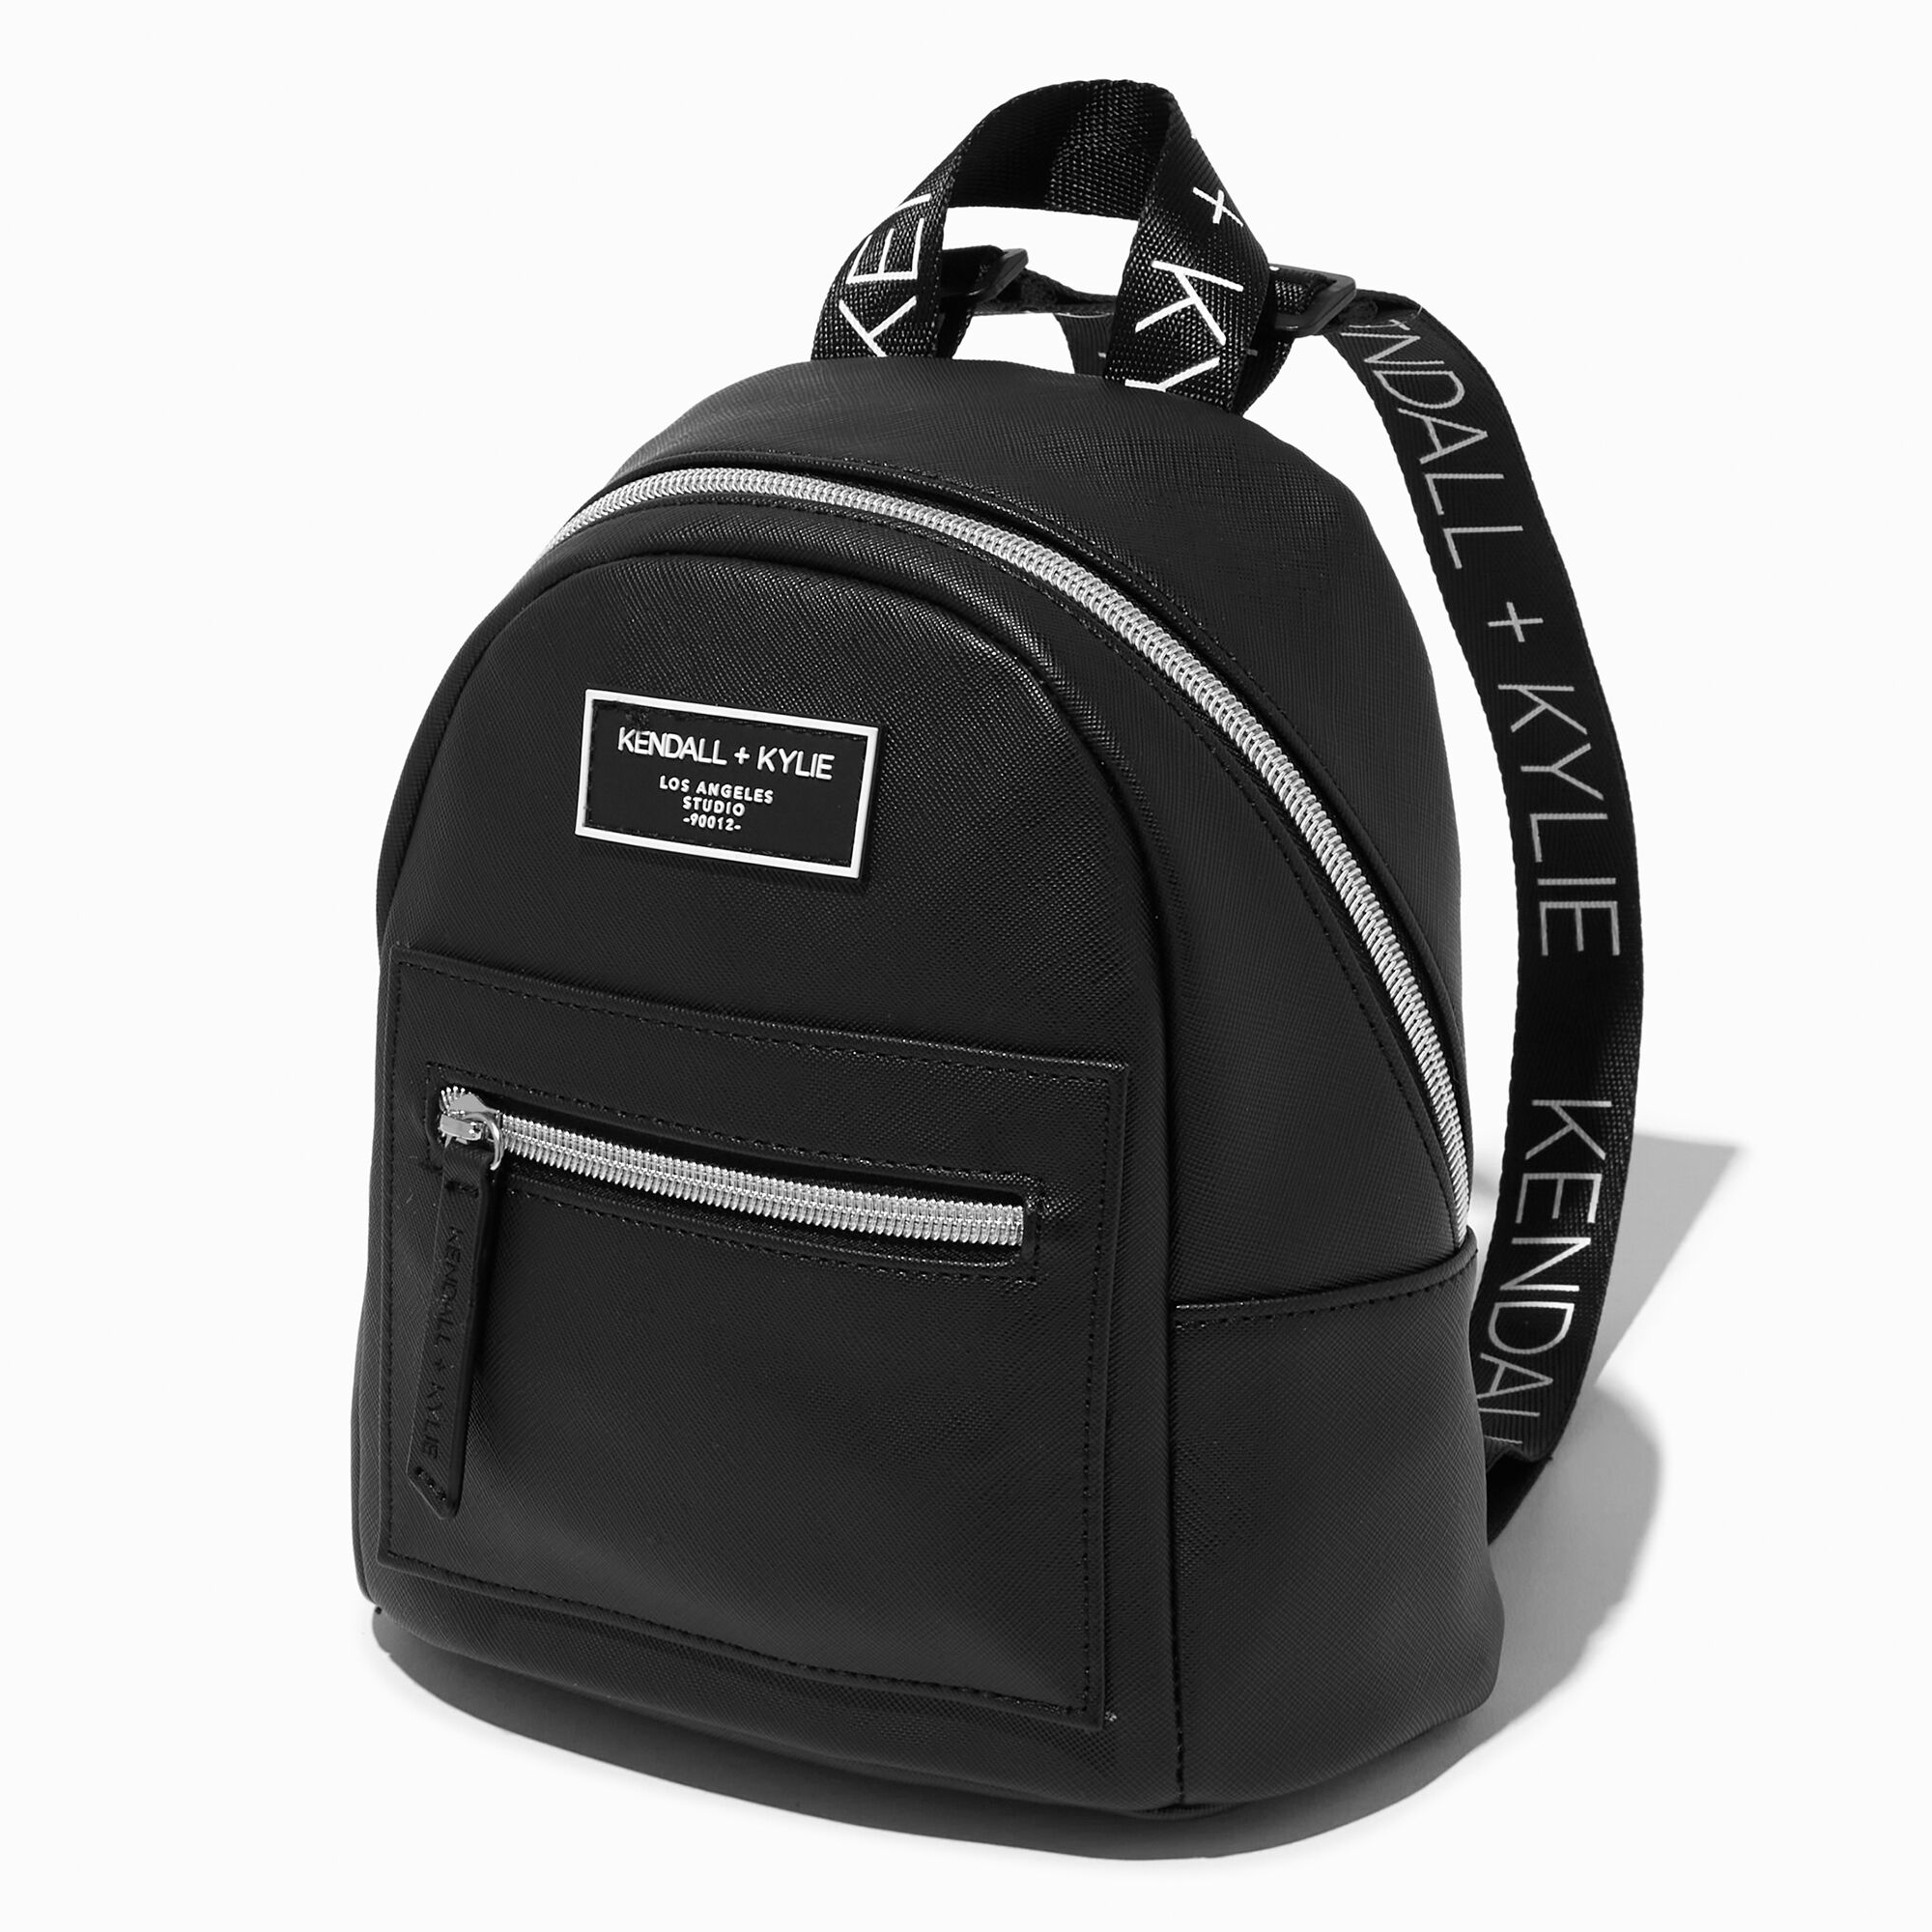 KENDALL + KYLIE Small Zipper Black Backpack